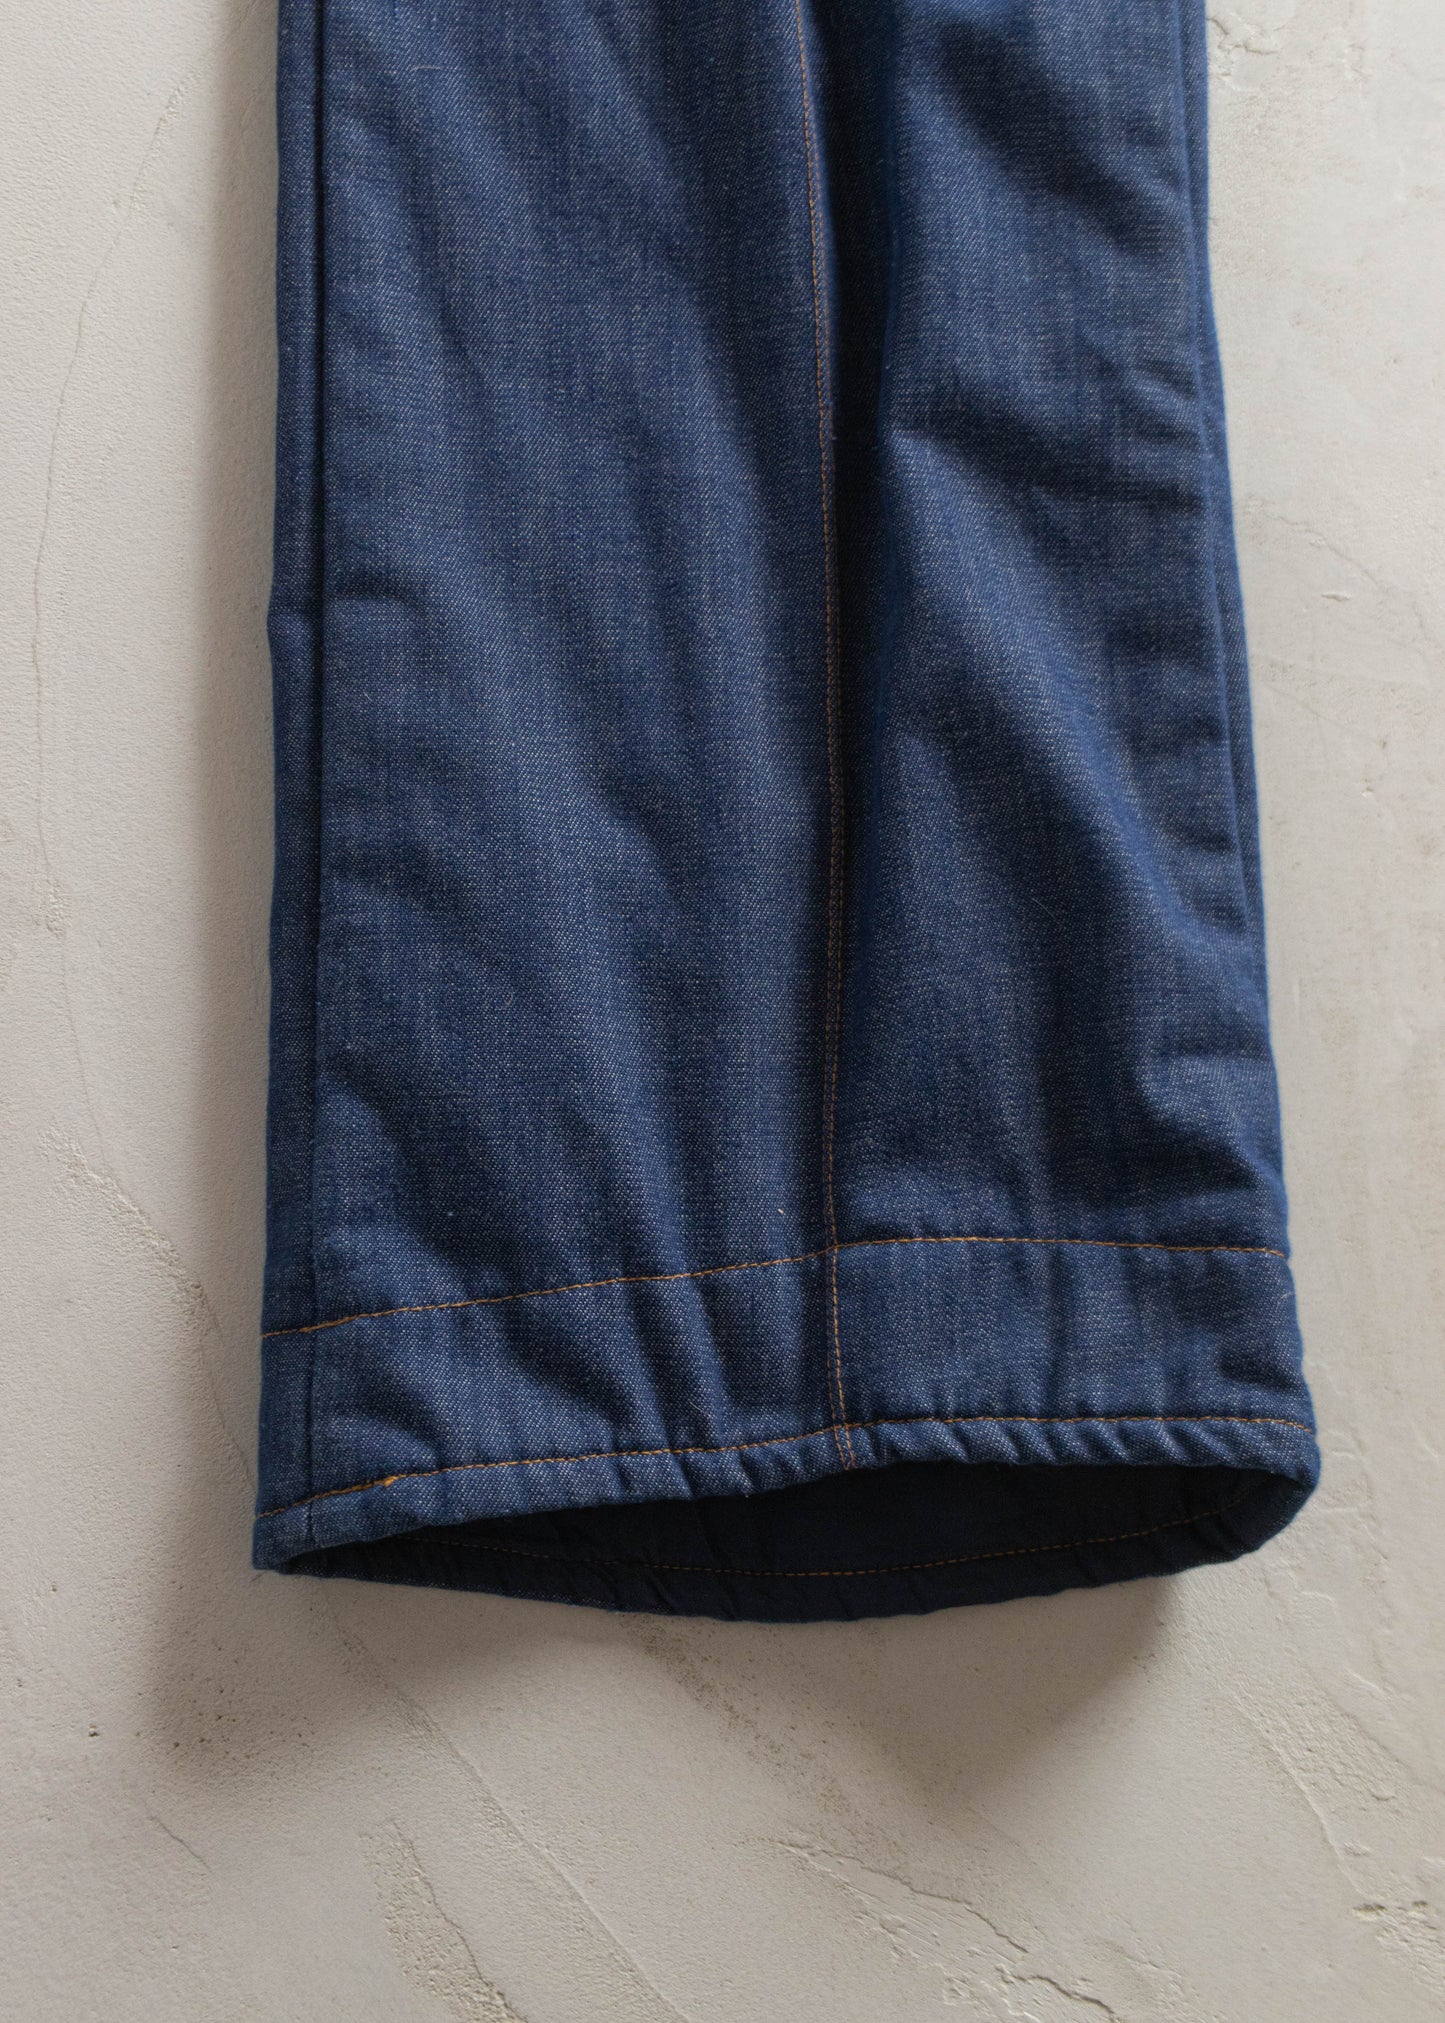 Vintage 1970s Levi's Denim Ski Pants Size M/L